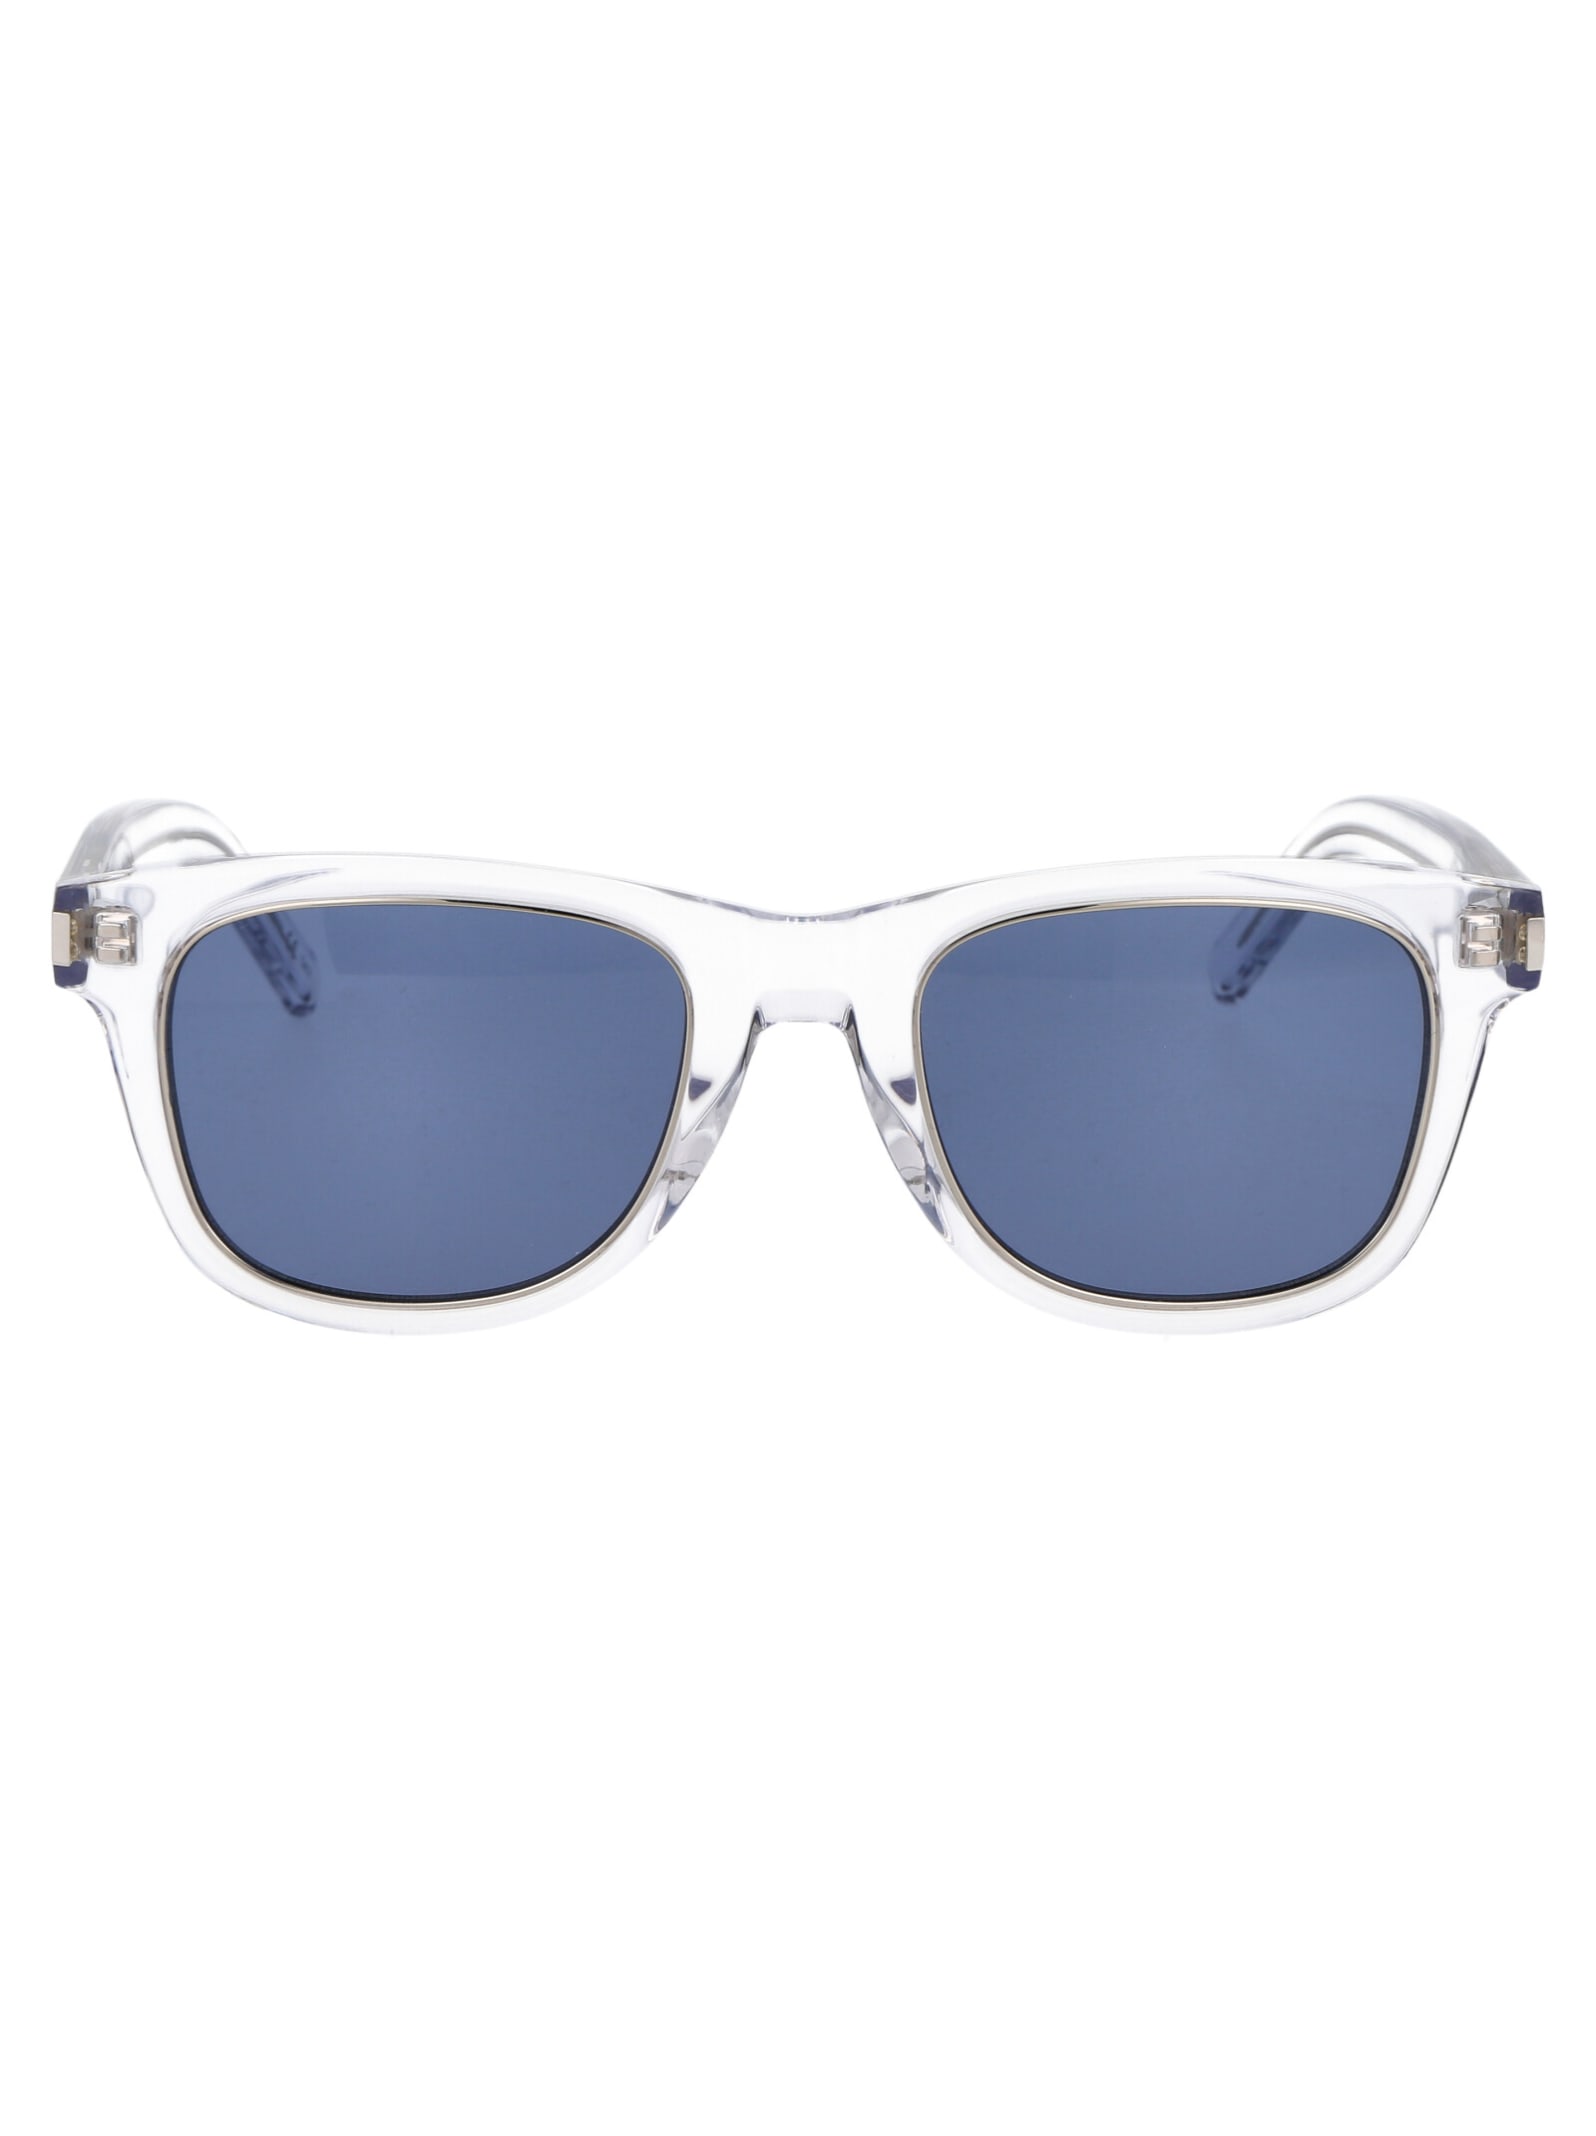 Saint Laurent Eyewear Sl 51 Rim Sunglasses